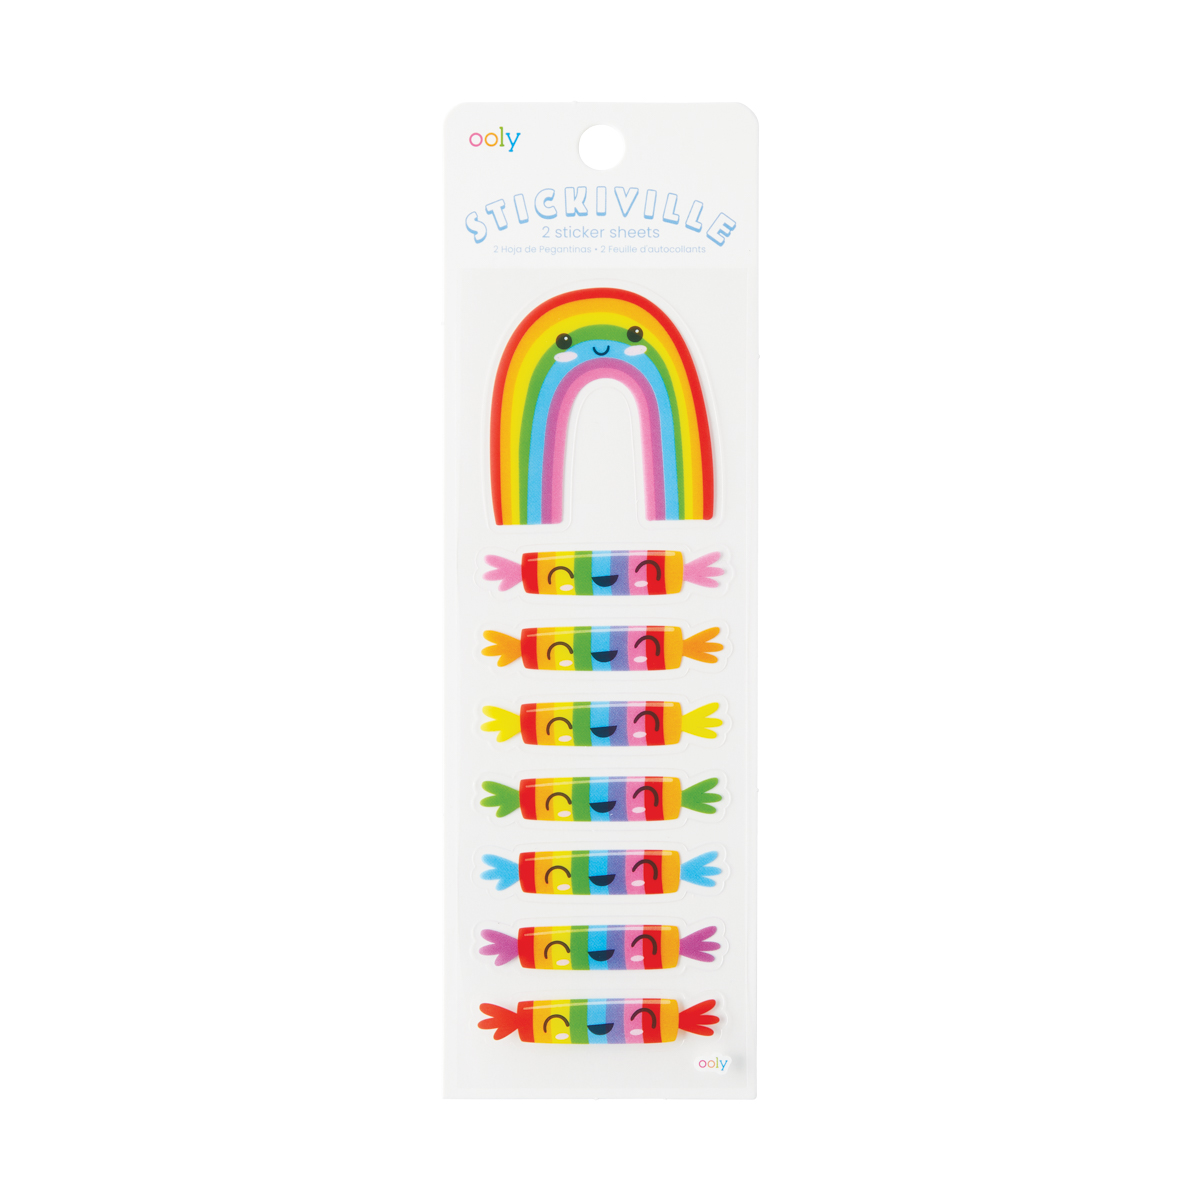  Ooly Stickiville Çıkartmalar - Rainbow Candies